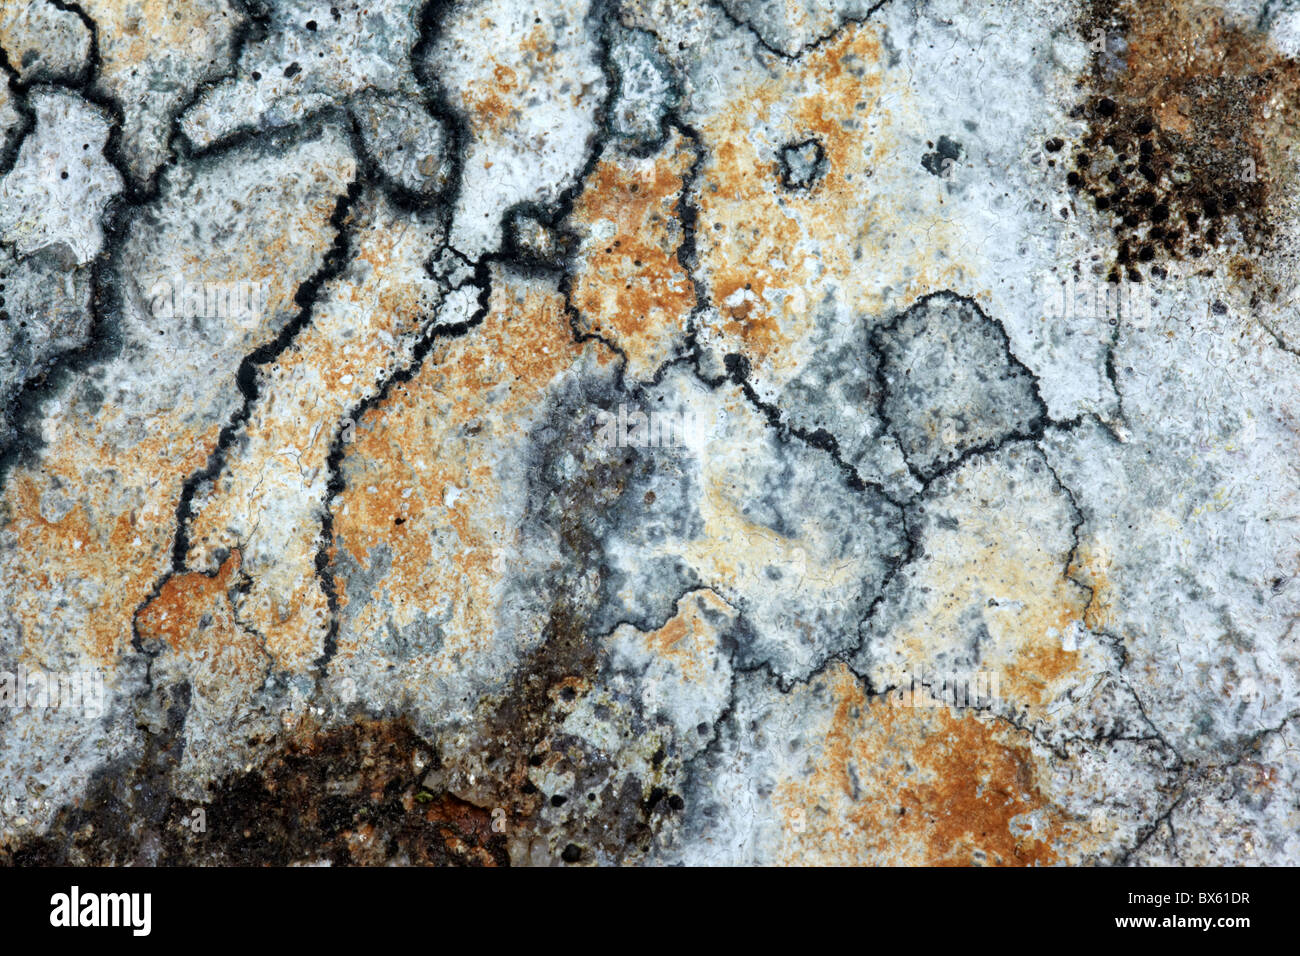 Lichen on rocks in the Scottish Highlands Stock Photo